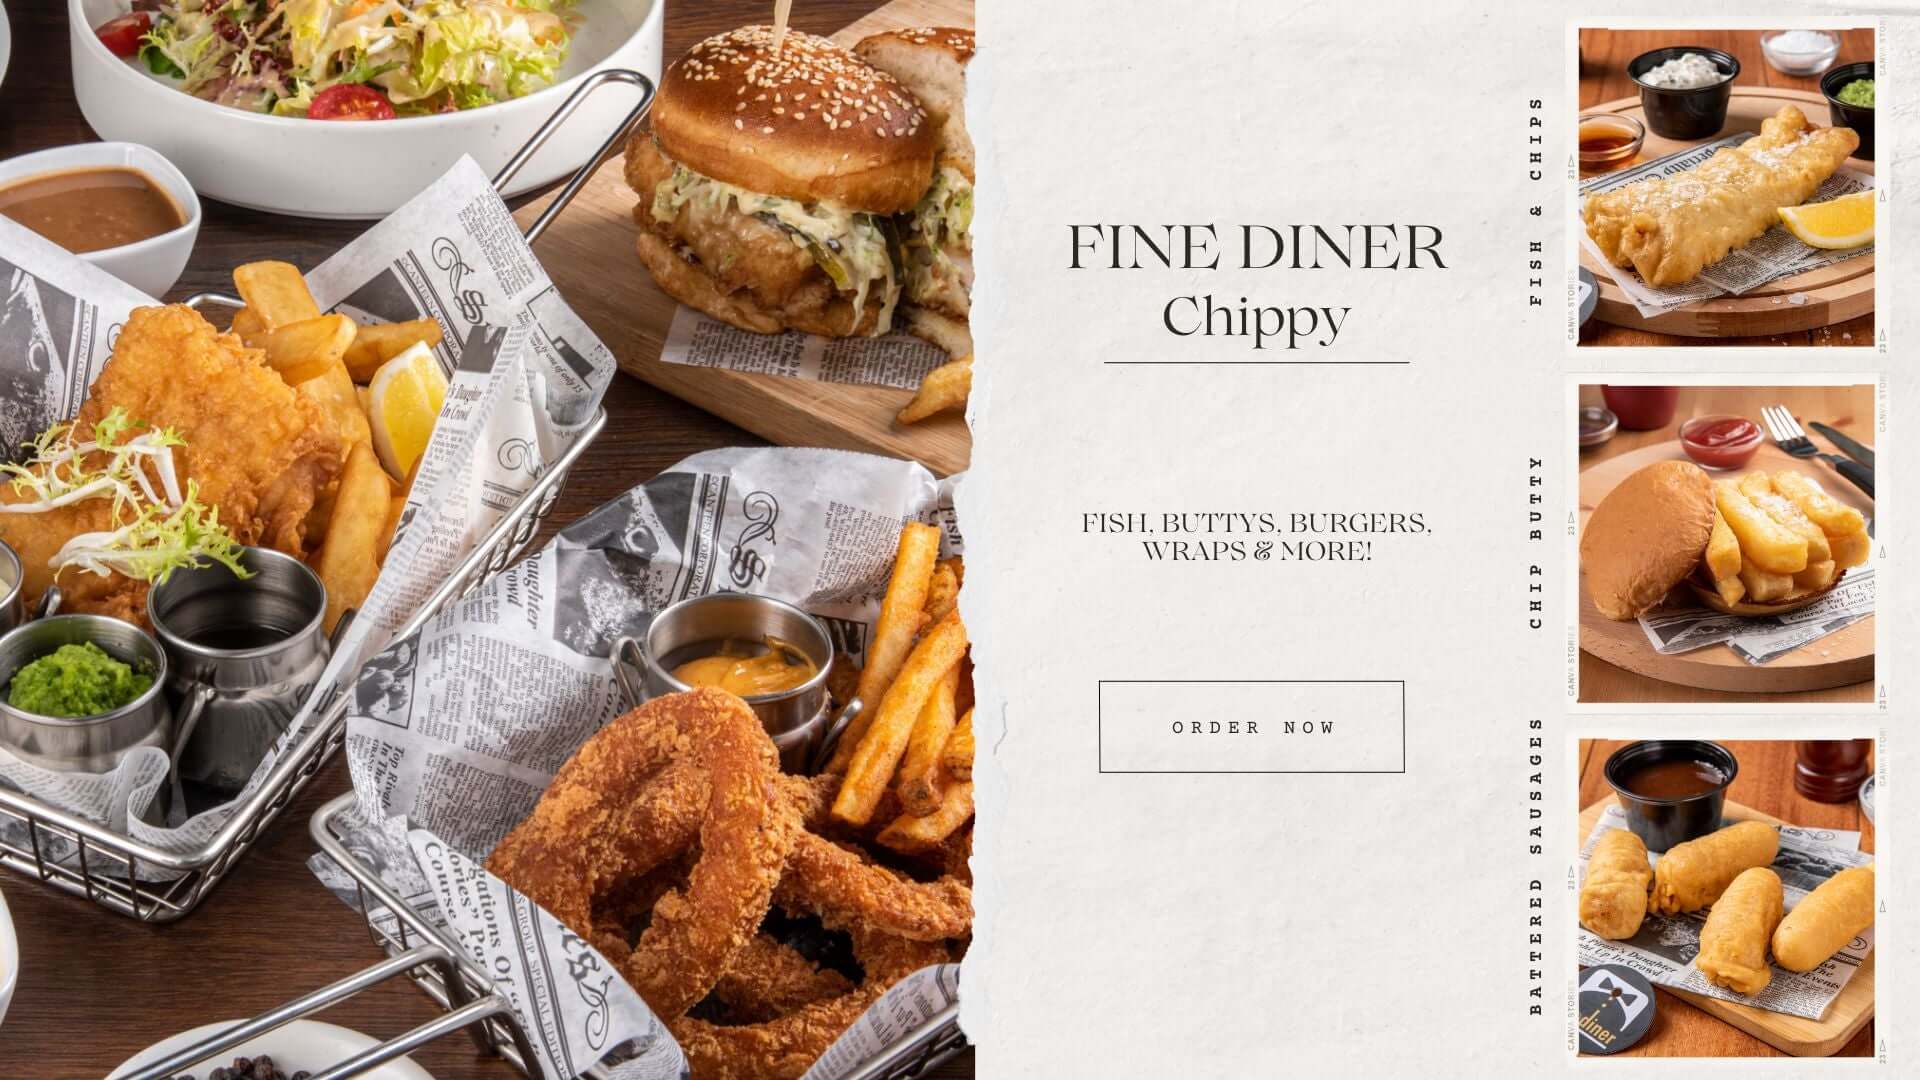 #Fine Diner Chippy